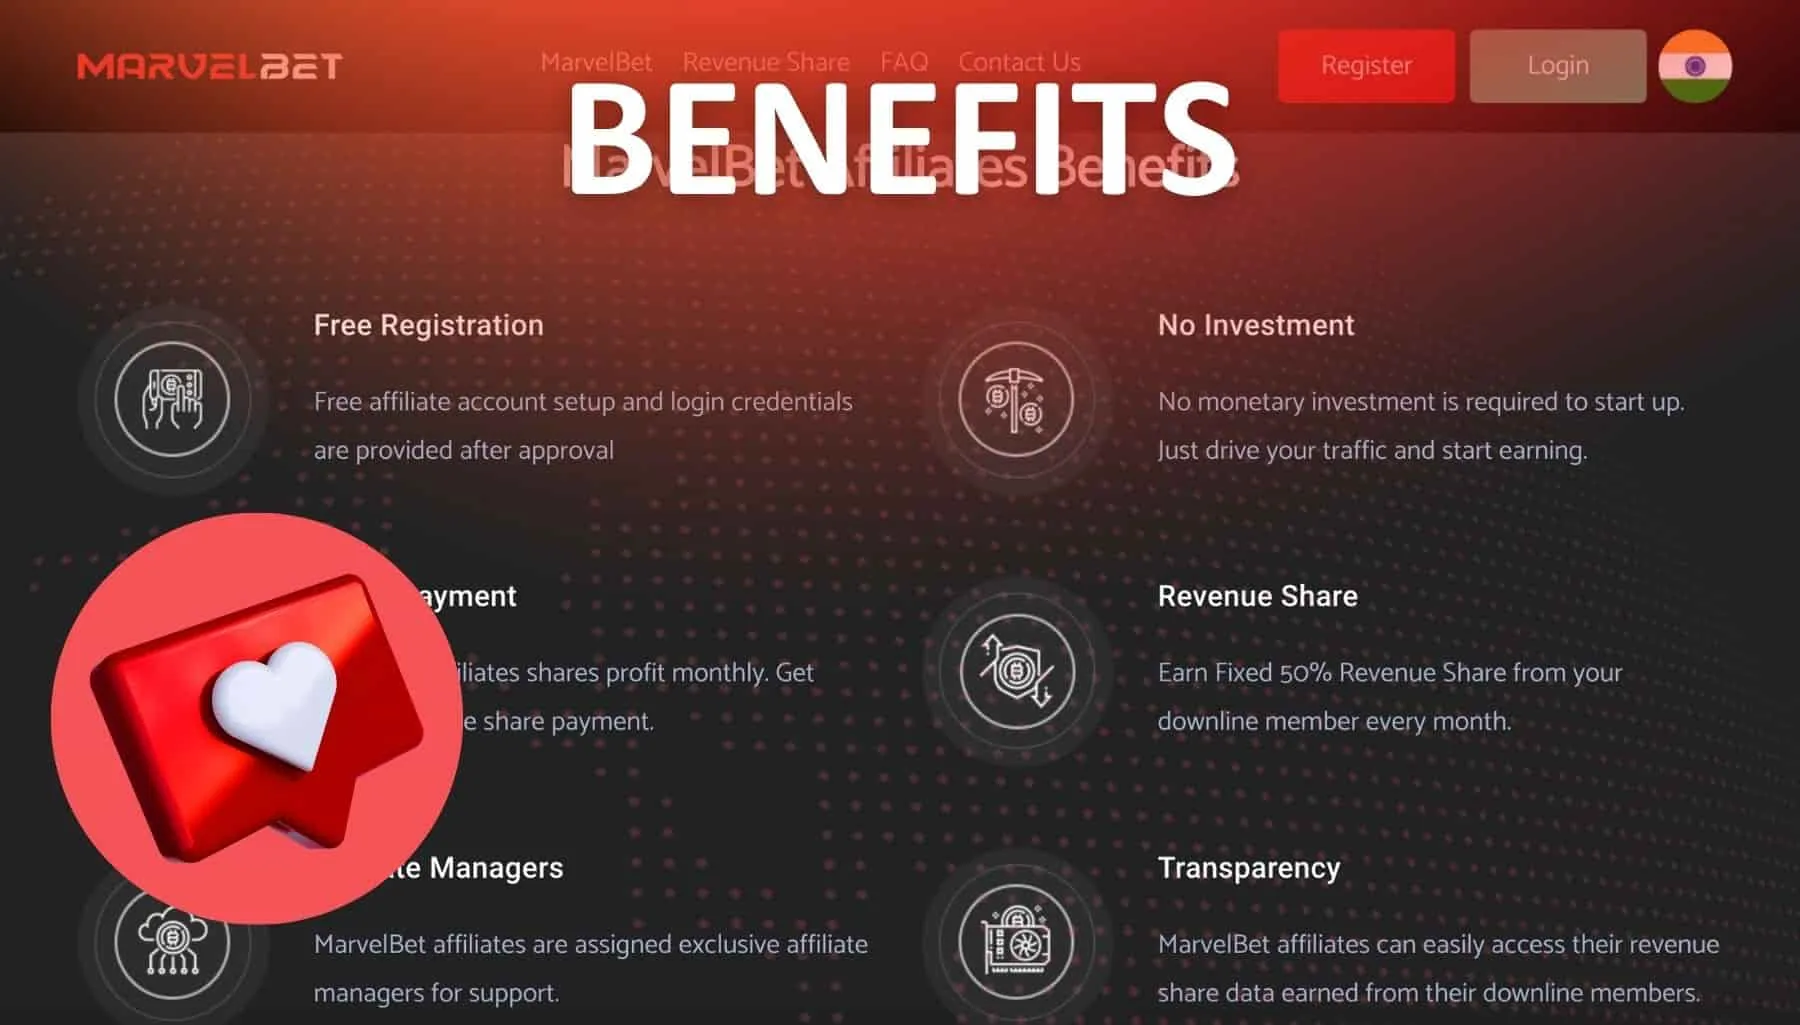 Marvelbet India affiliates benefits overview